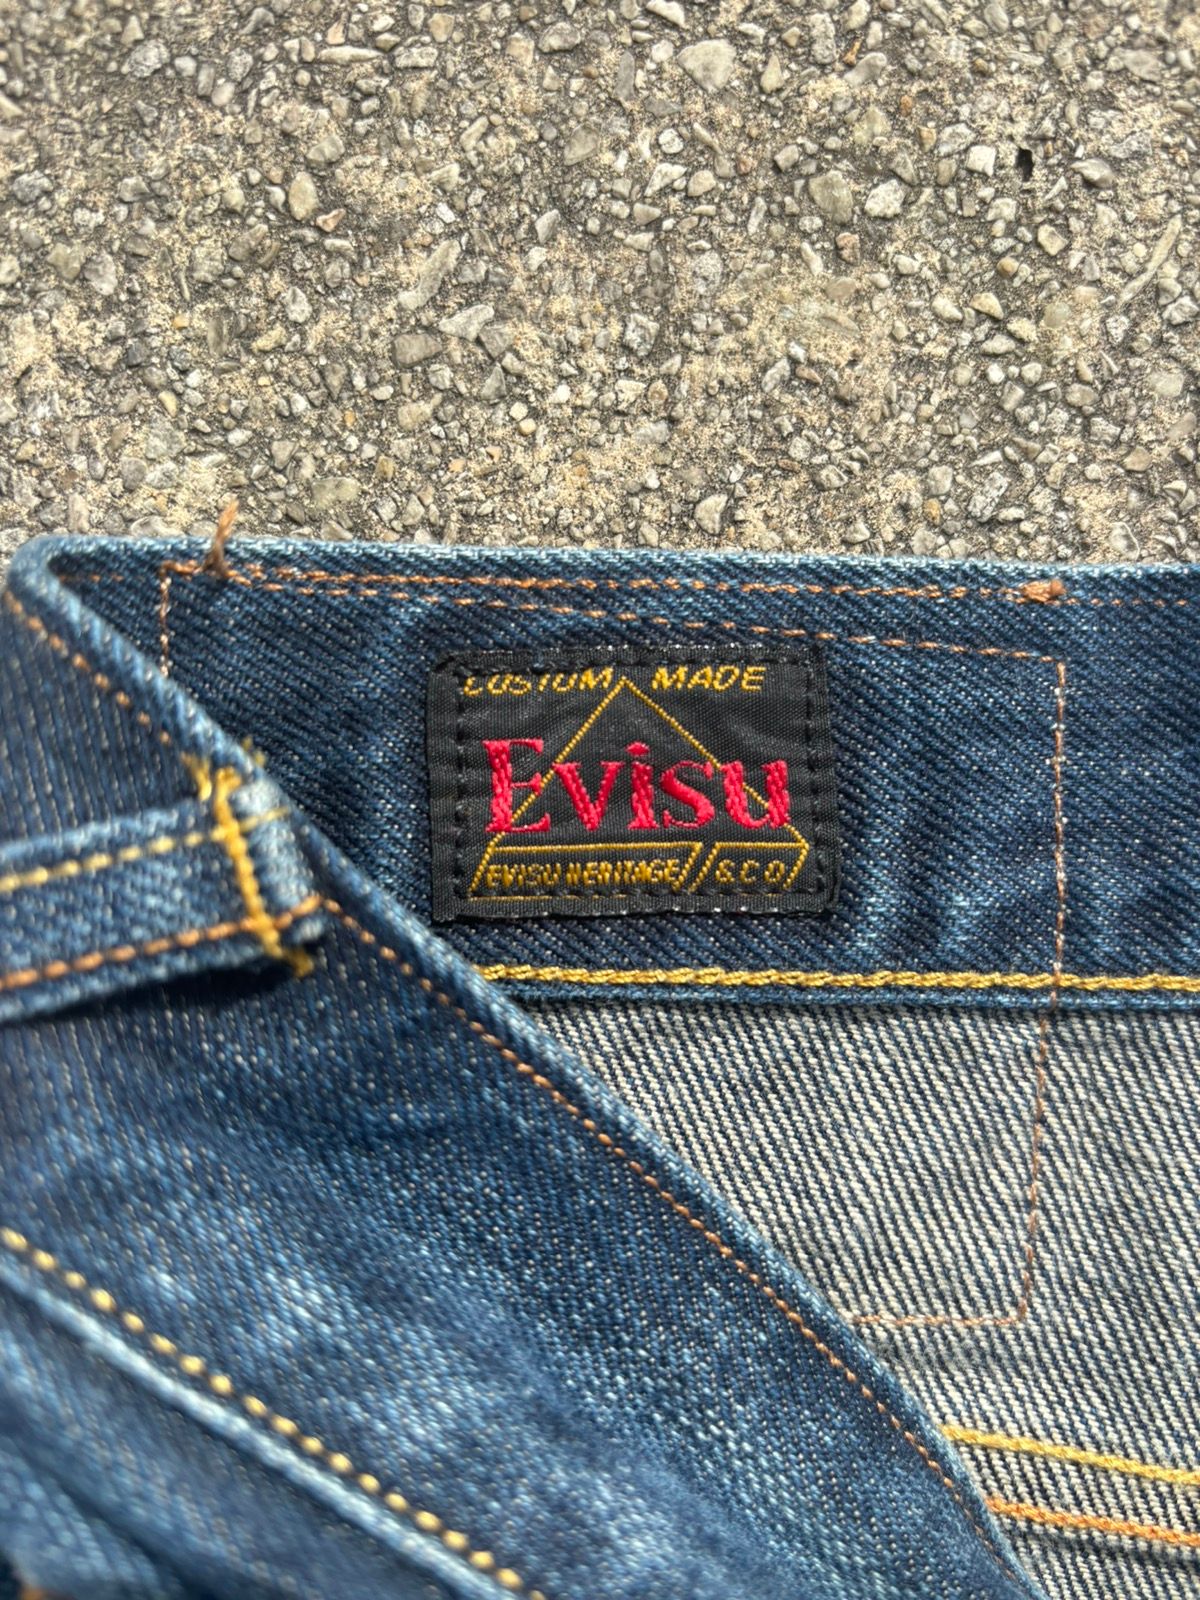 Evisu Evisu No.3 Denim Jeans Size US 33 - 6 Thumbnail